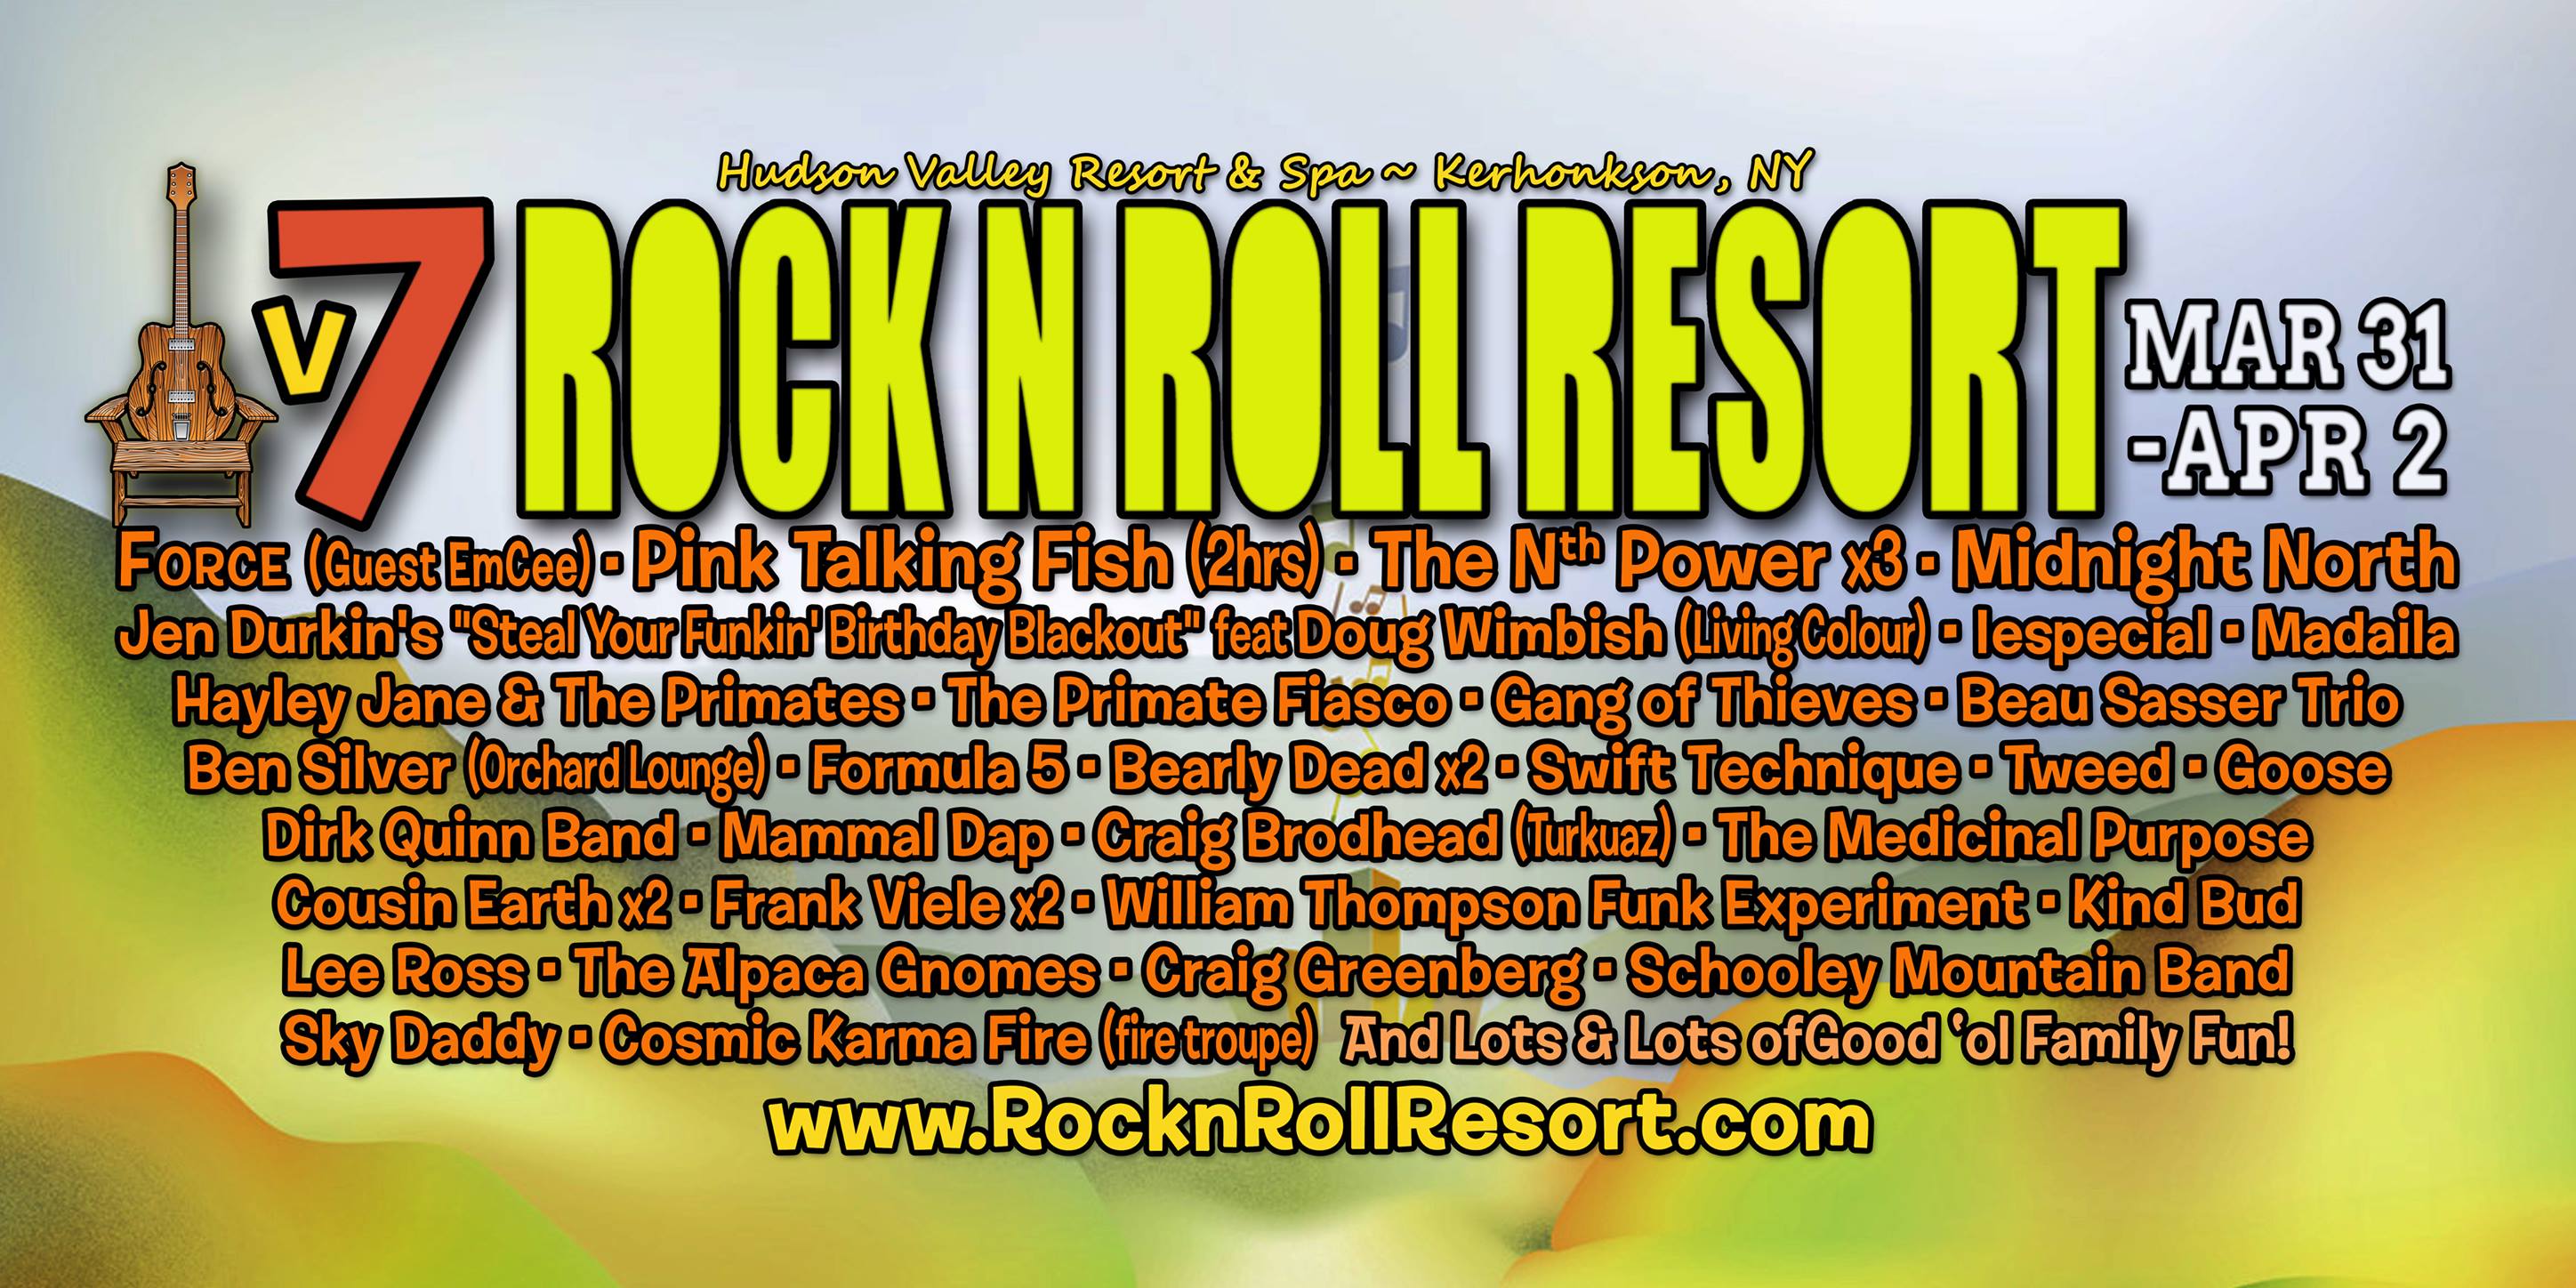 Rock n Roll Resort v7: 'Feast of Fools'